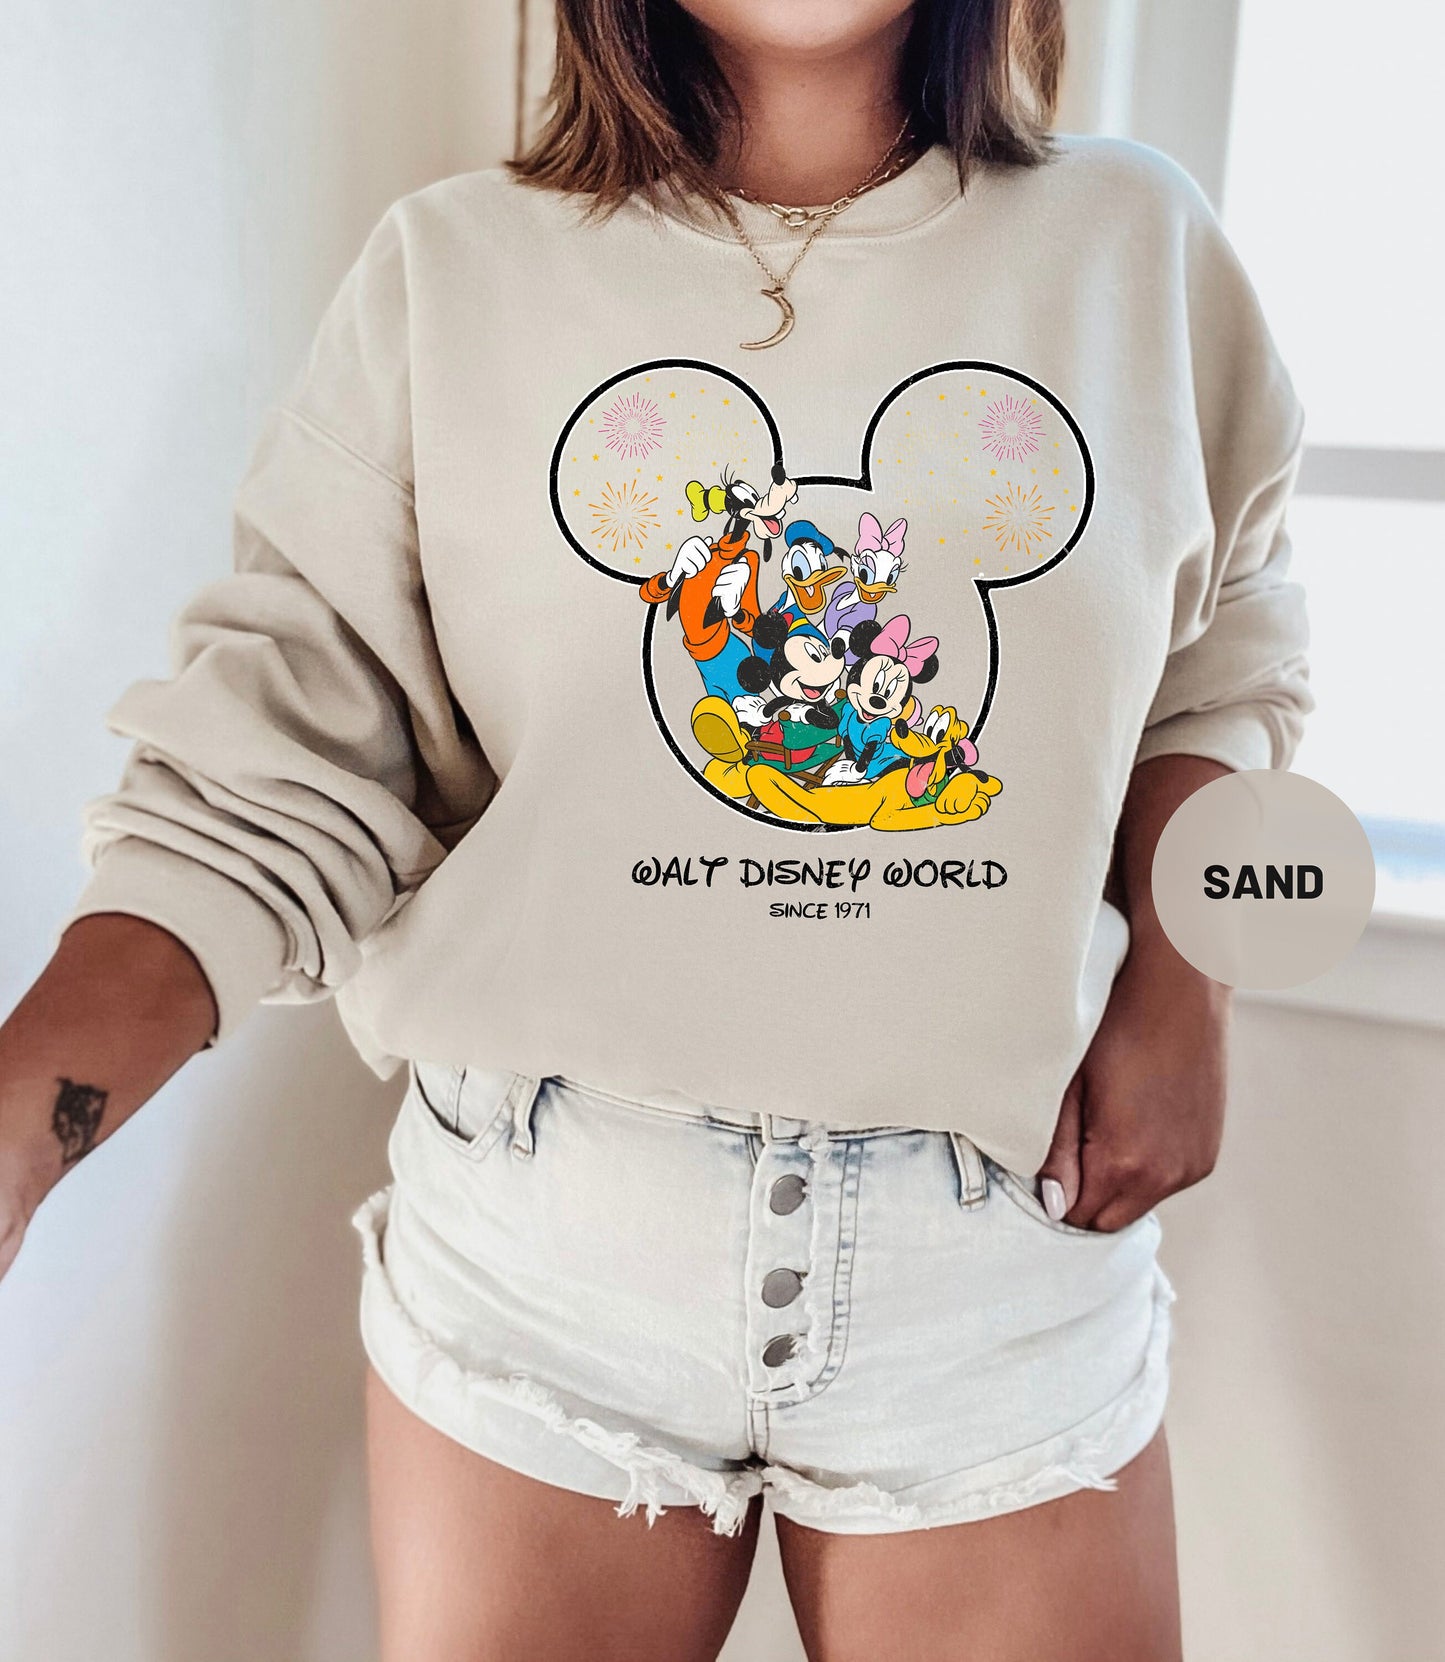 Walt Disney World Since 1971 Sweatshirt, Disneyworld Est 1971 Sweat, Mickey and Friend Shirt, Disney Family Shirt, Minnie Donald Pluto Shirt